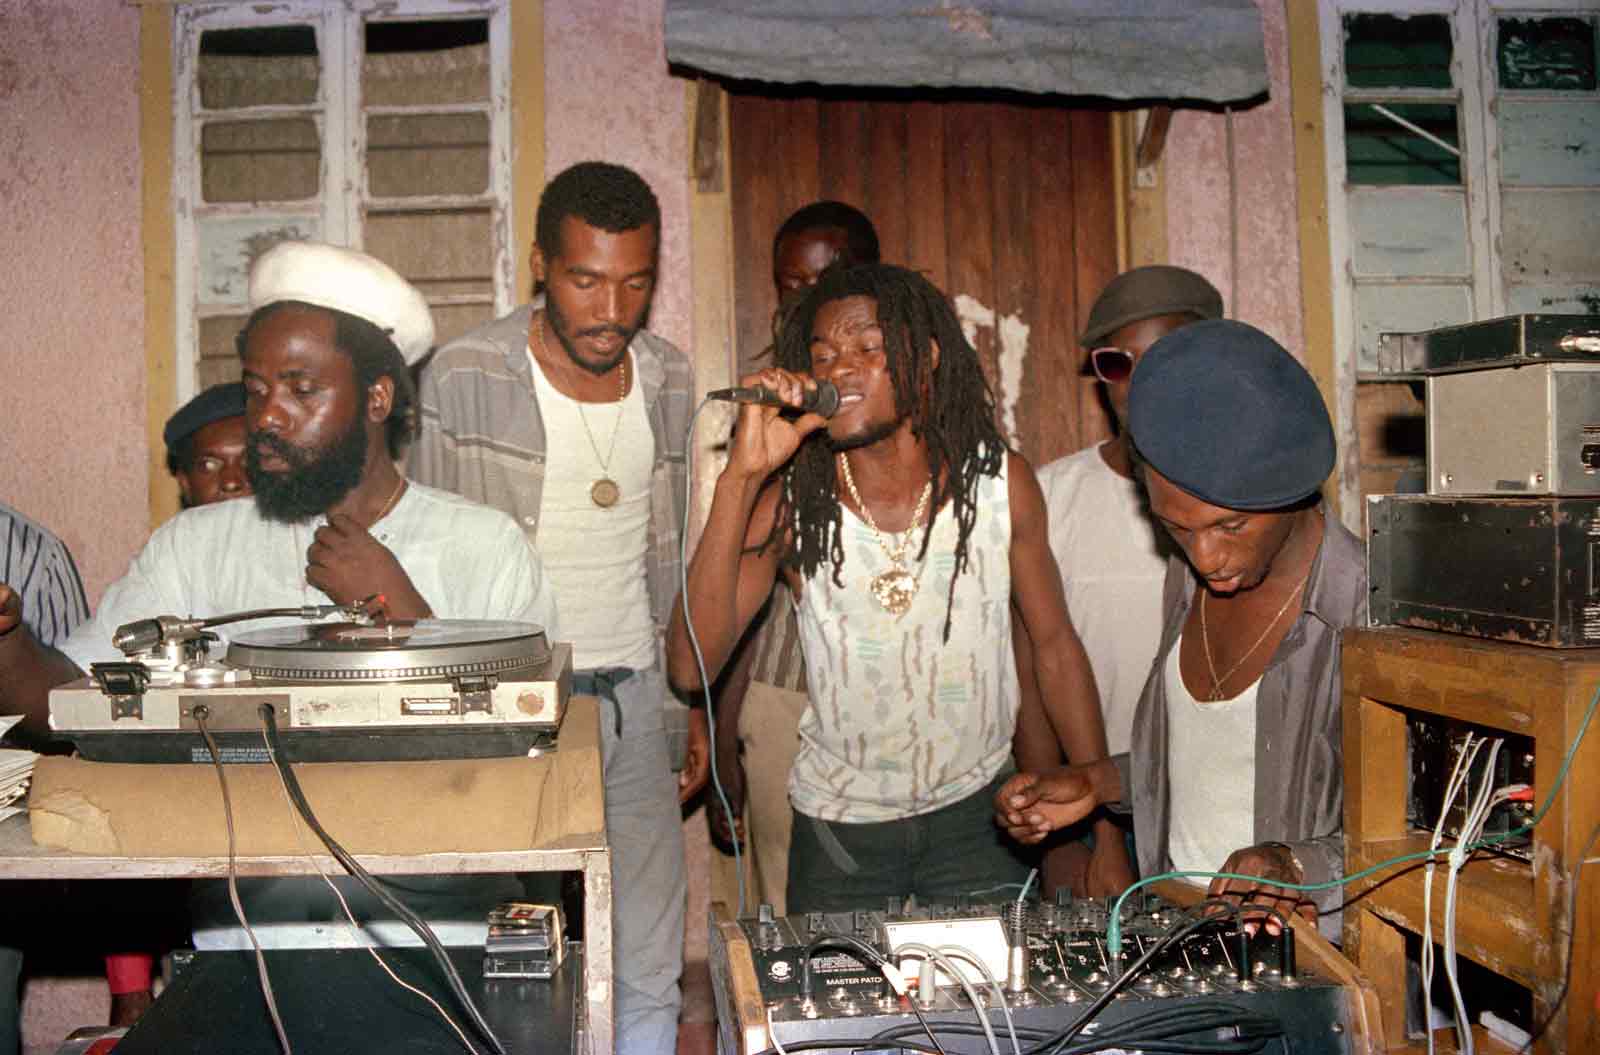 Chris Wayne performing with Sugar Minnott’s Youth Promotion soundsystem, Jamaica, 1985